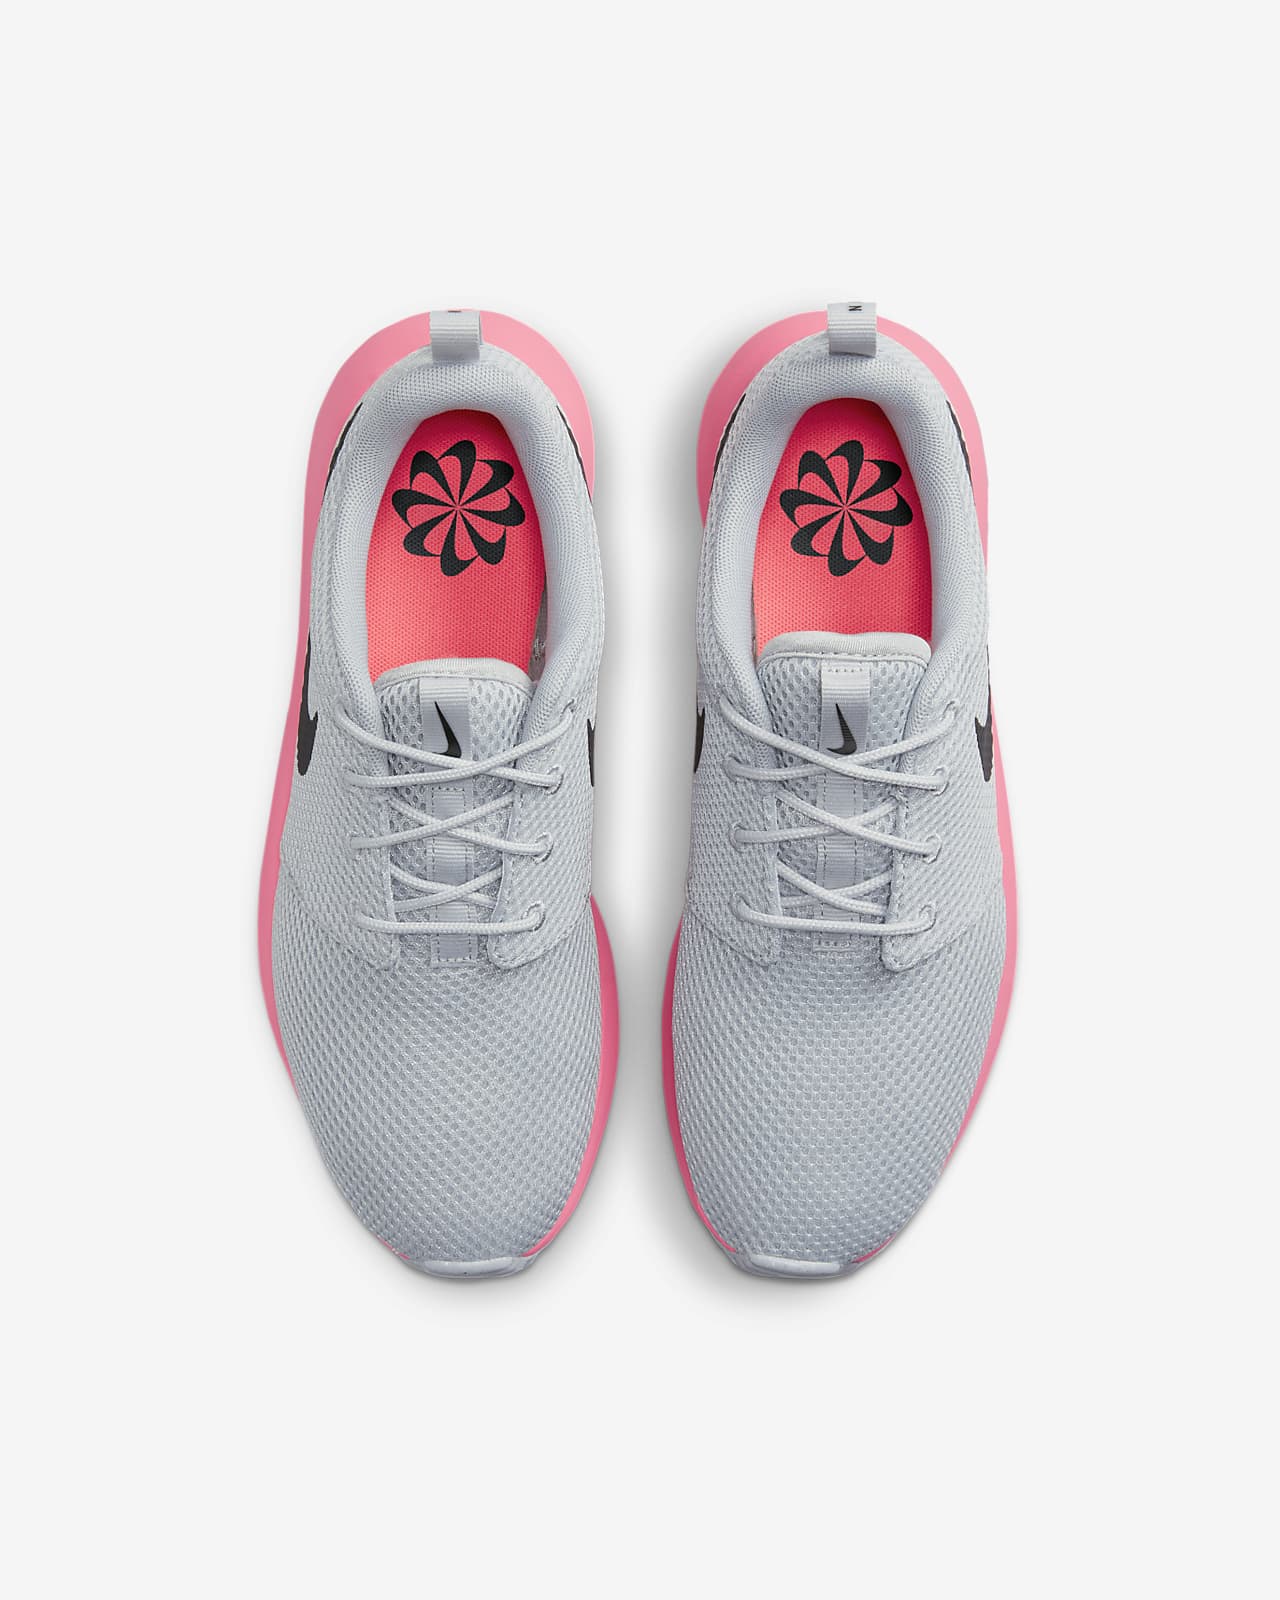 Verbazing brand emulsie Nike Roshe 2 G Jr. Golfschoenen voor kleuters/kids. Nike NL